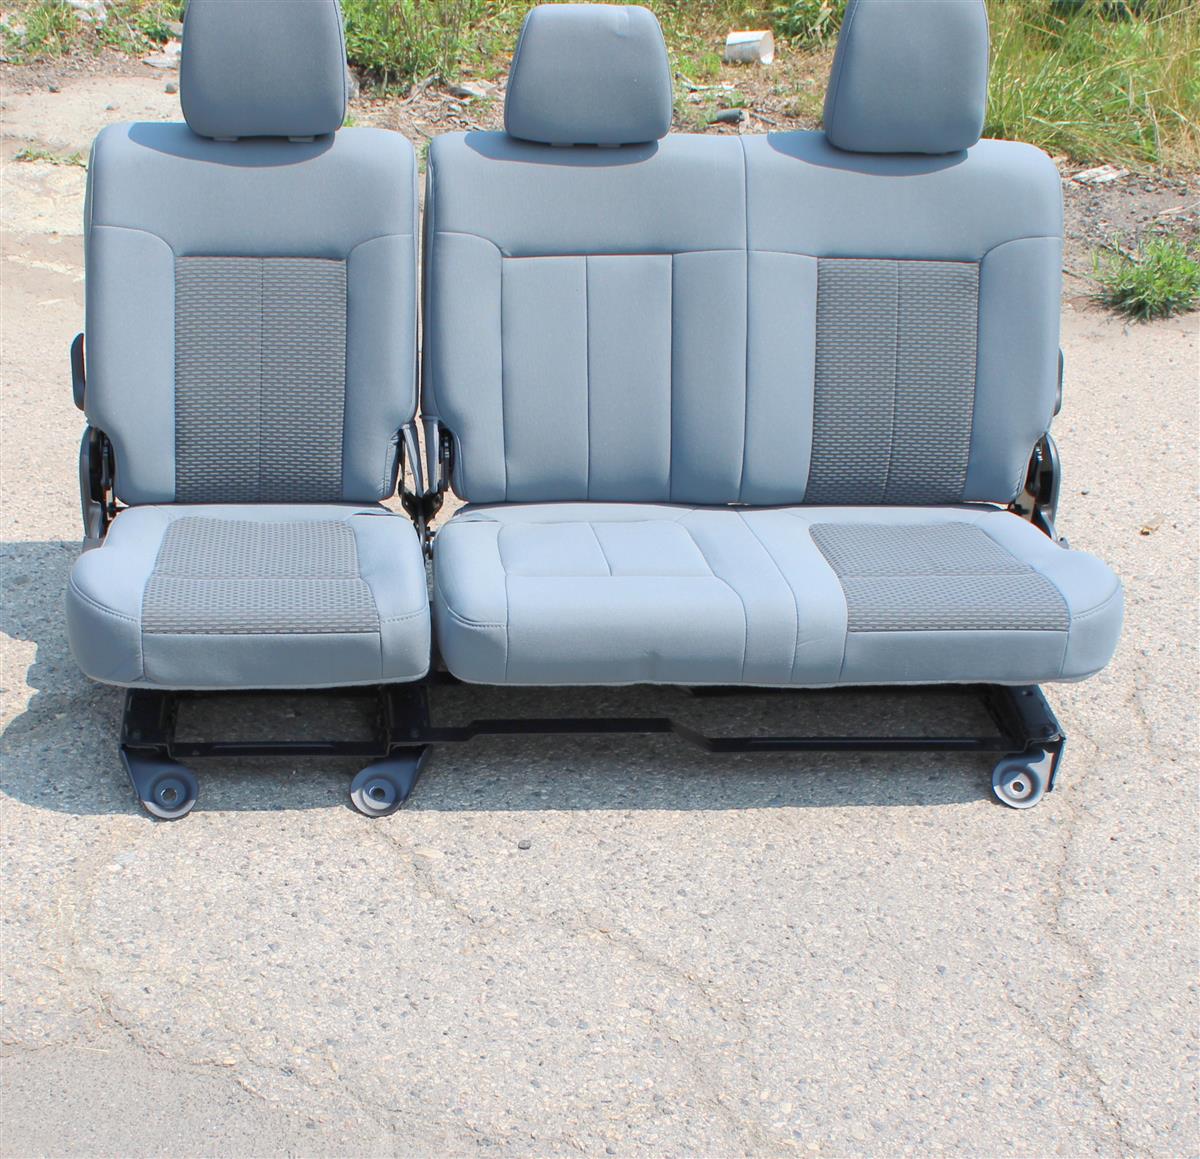 SP-2994 | _SP-2994 6040 Split Fold Down Vehicle Bench Seats  (16).JPG